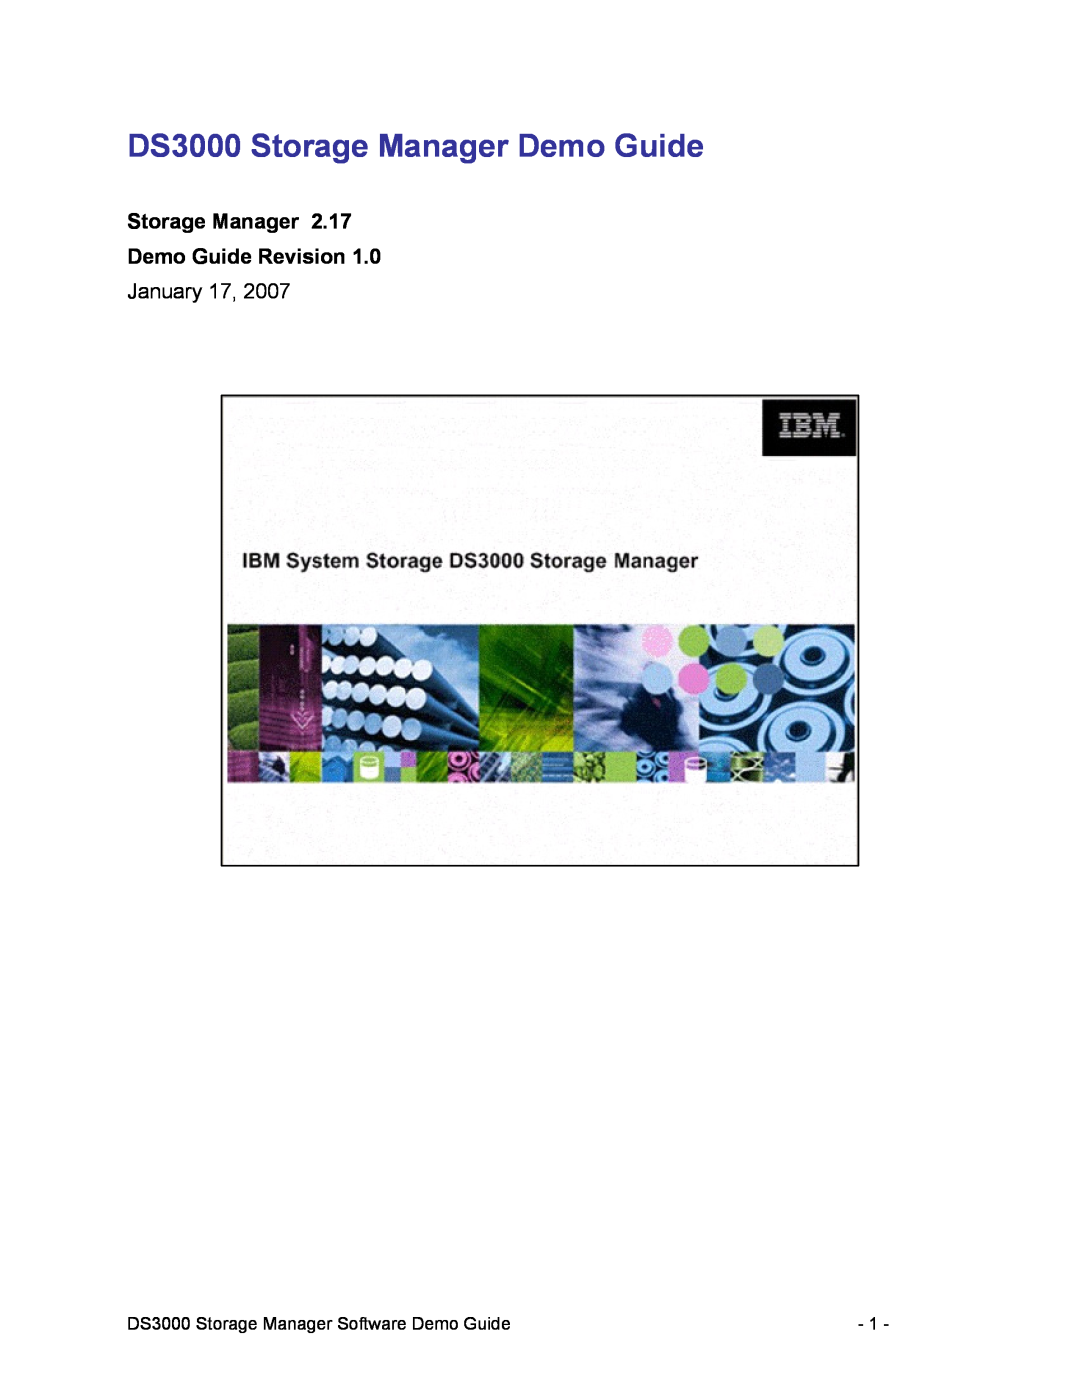 IBM DS5000, DS3000 manual IBM System Storage Digital Media Storage Solution Installation Guide, e-mail con.rice@lsi.com 